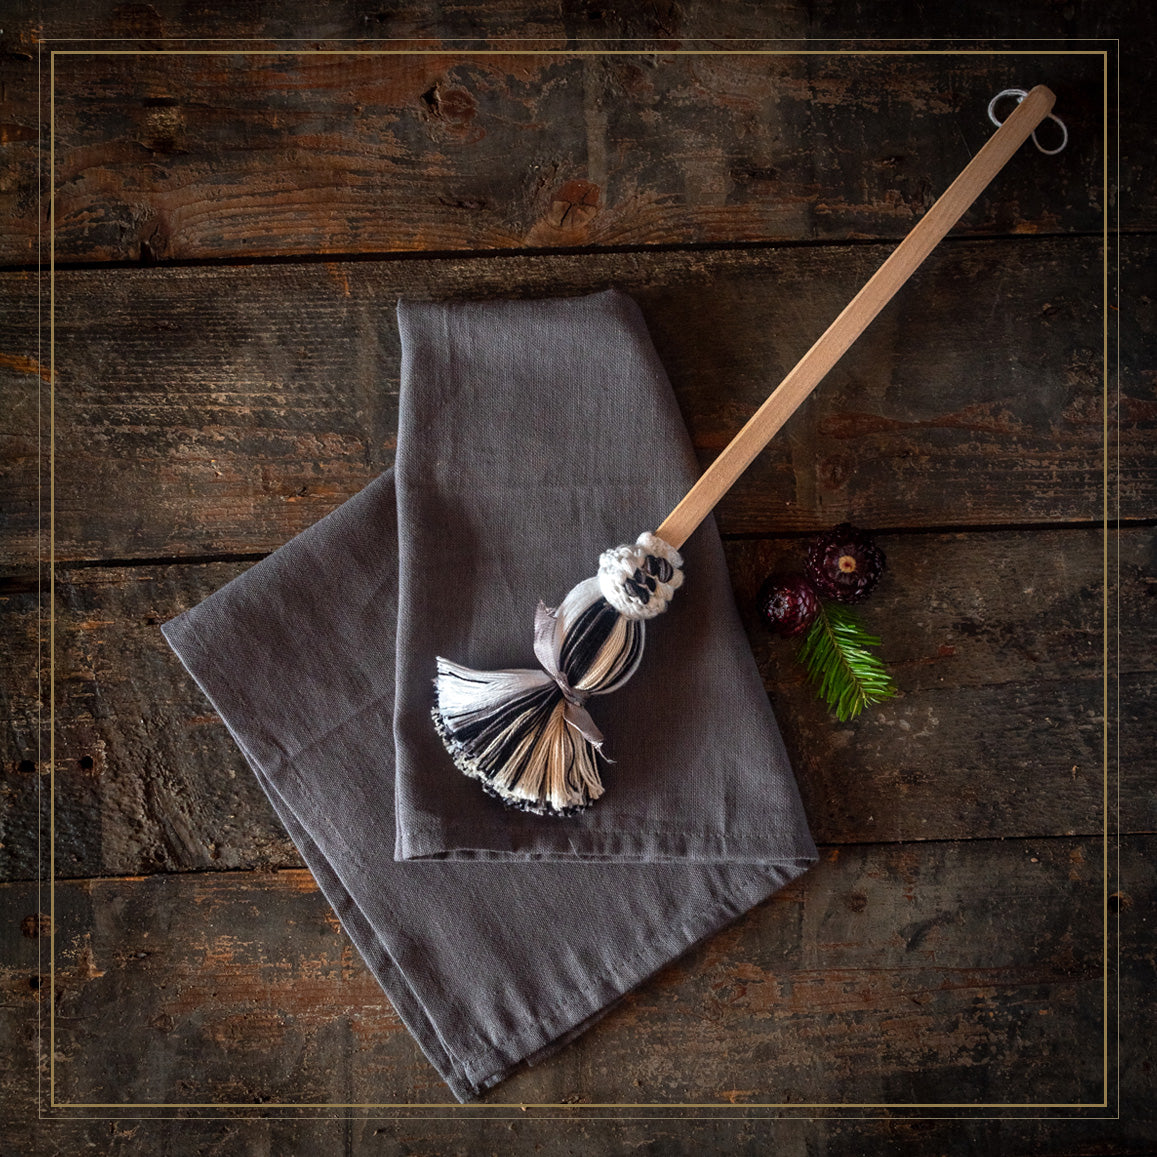 Handmade dish mop in wood &amp; coton